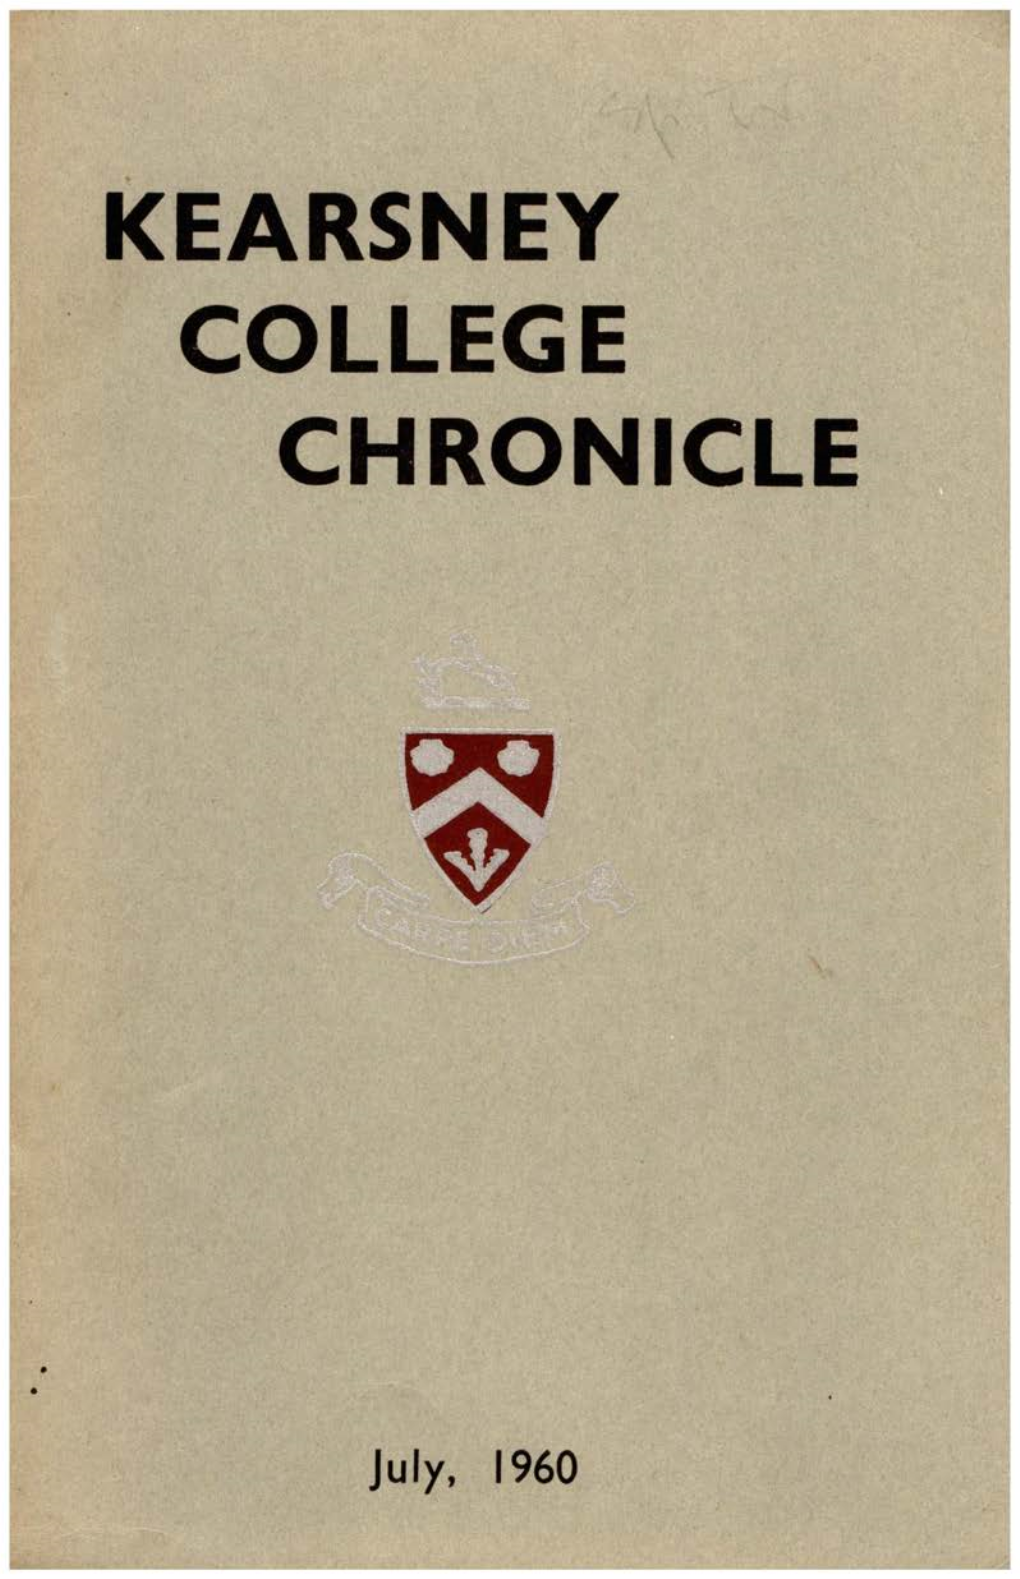 Kearsney College Chronicles